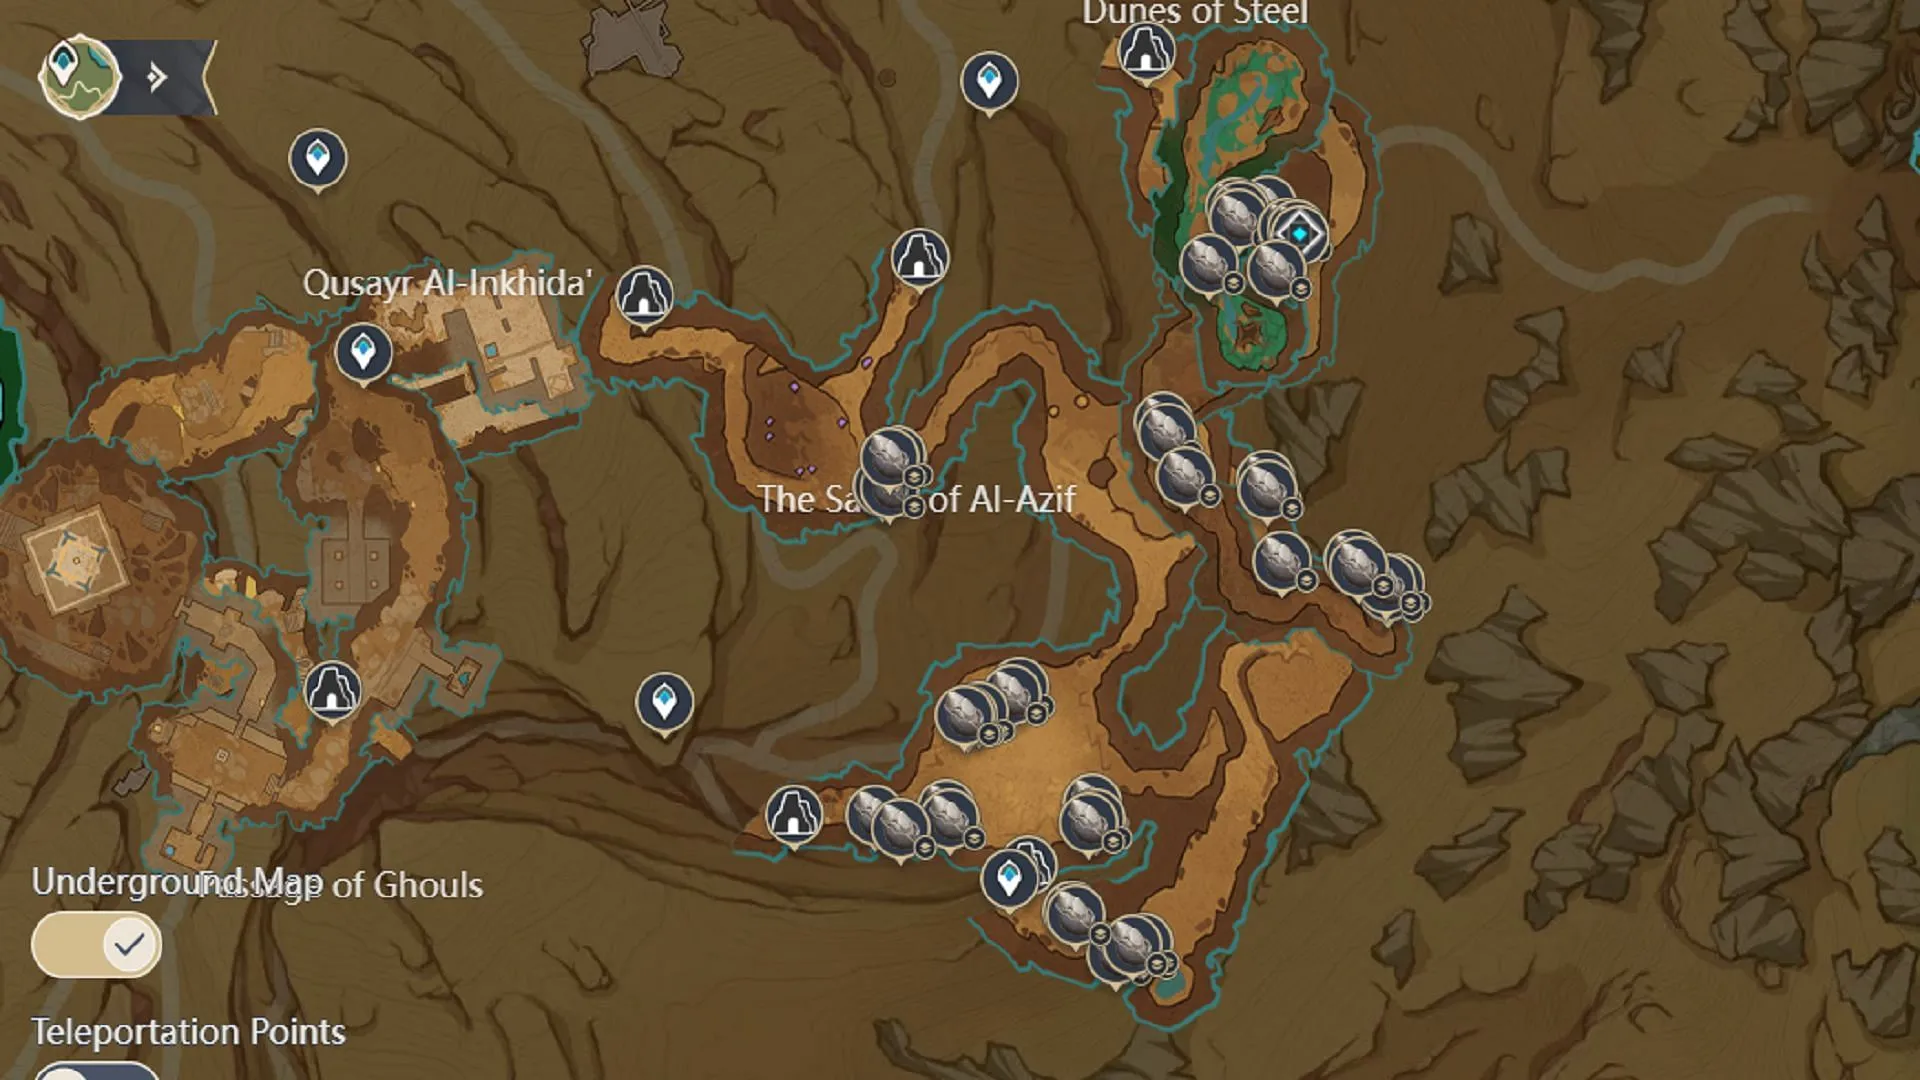 Hadramaveth の砂漠の地下地図 - Wenut Tunnets (HoYoverse 経由の画像)